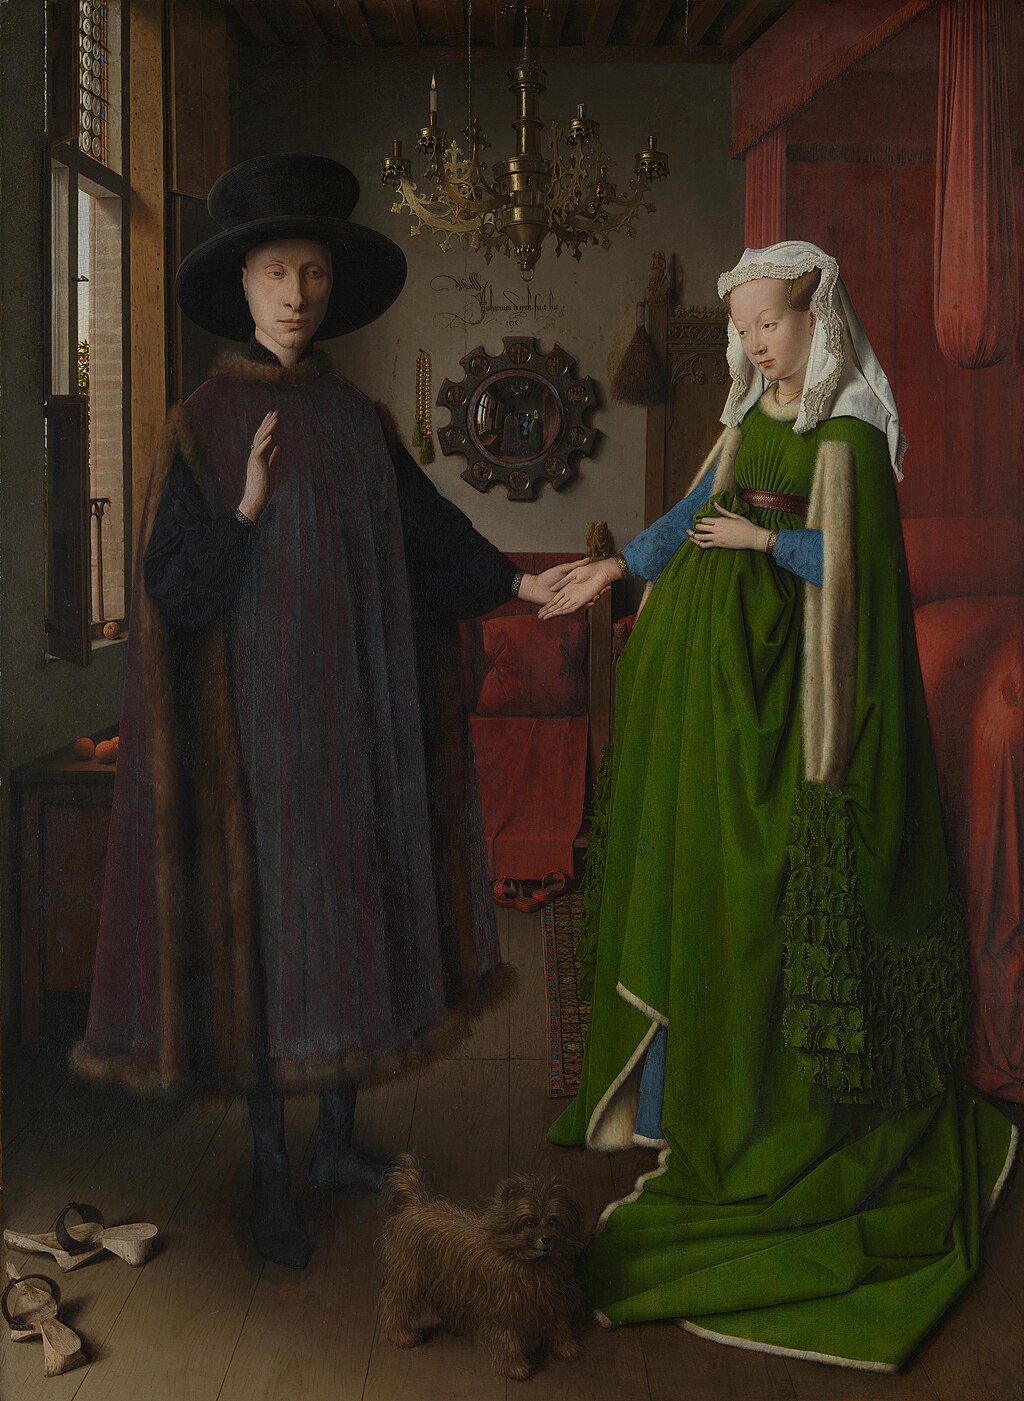 "Arnolfini Portrait" by Jan van Eyck